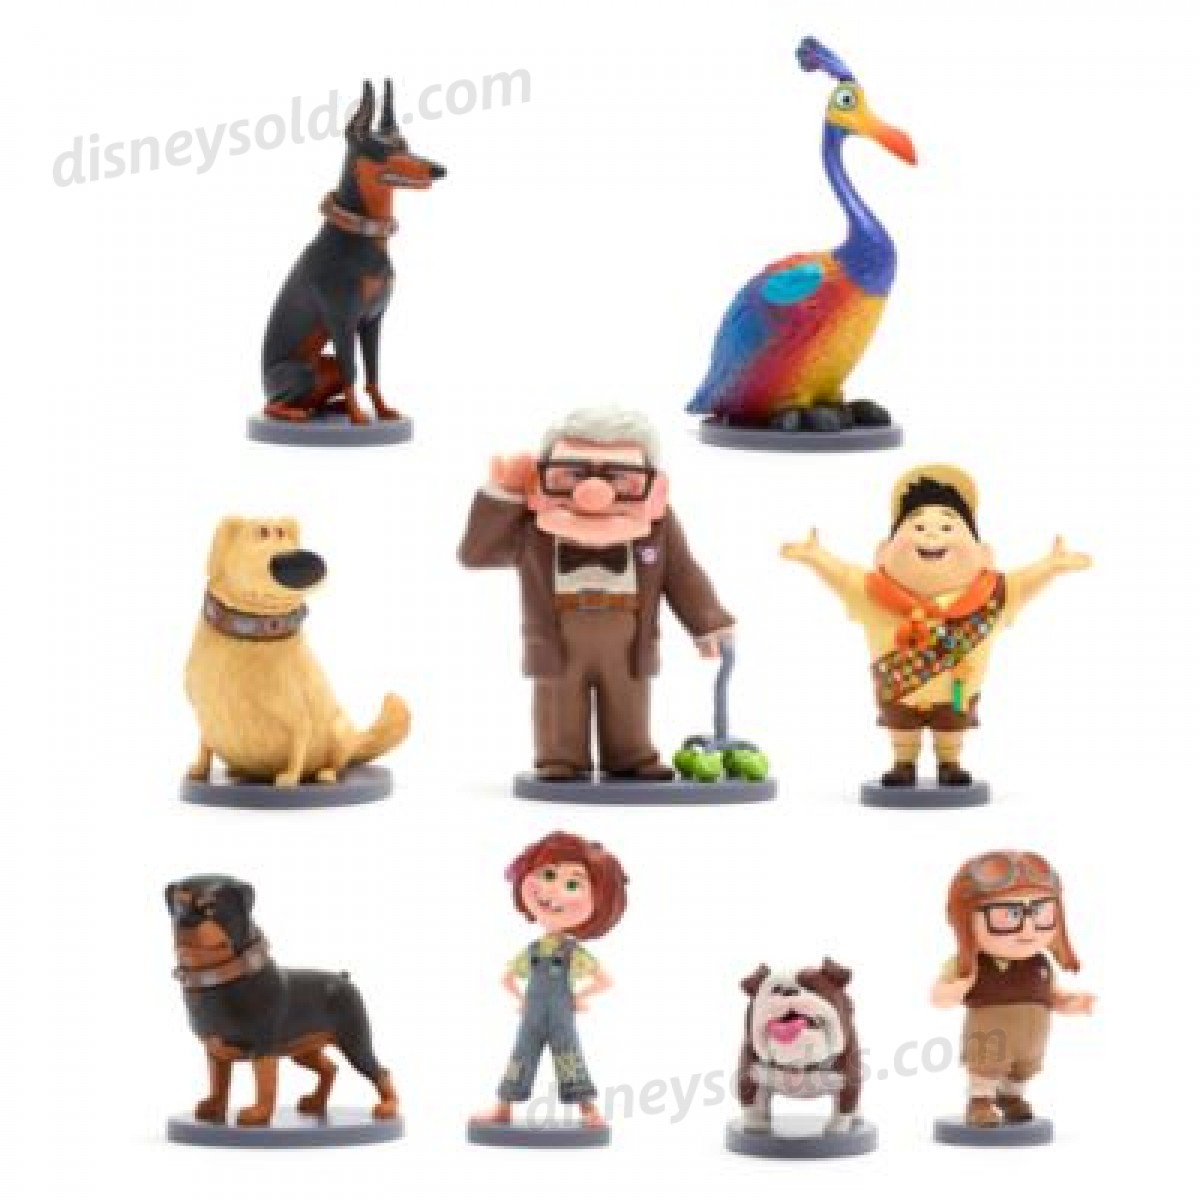 Disney Store Coffret deluxe de figurines, collection Disney